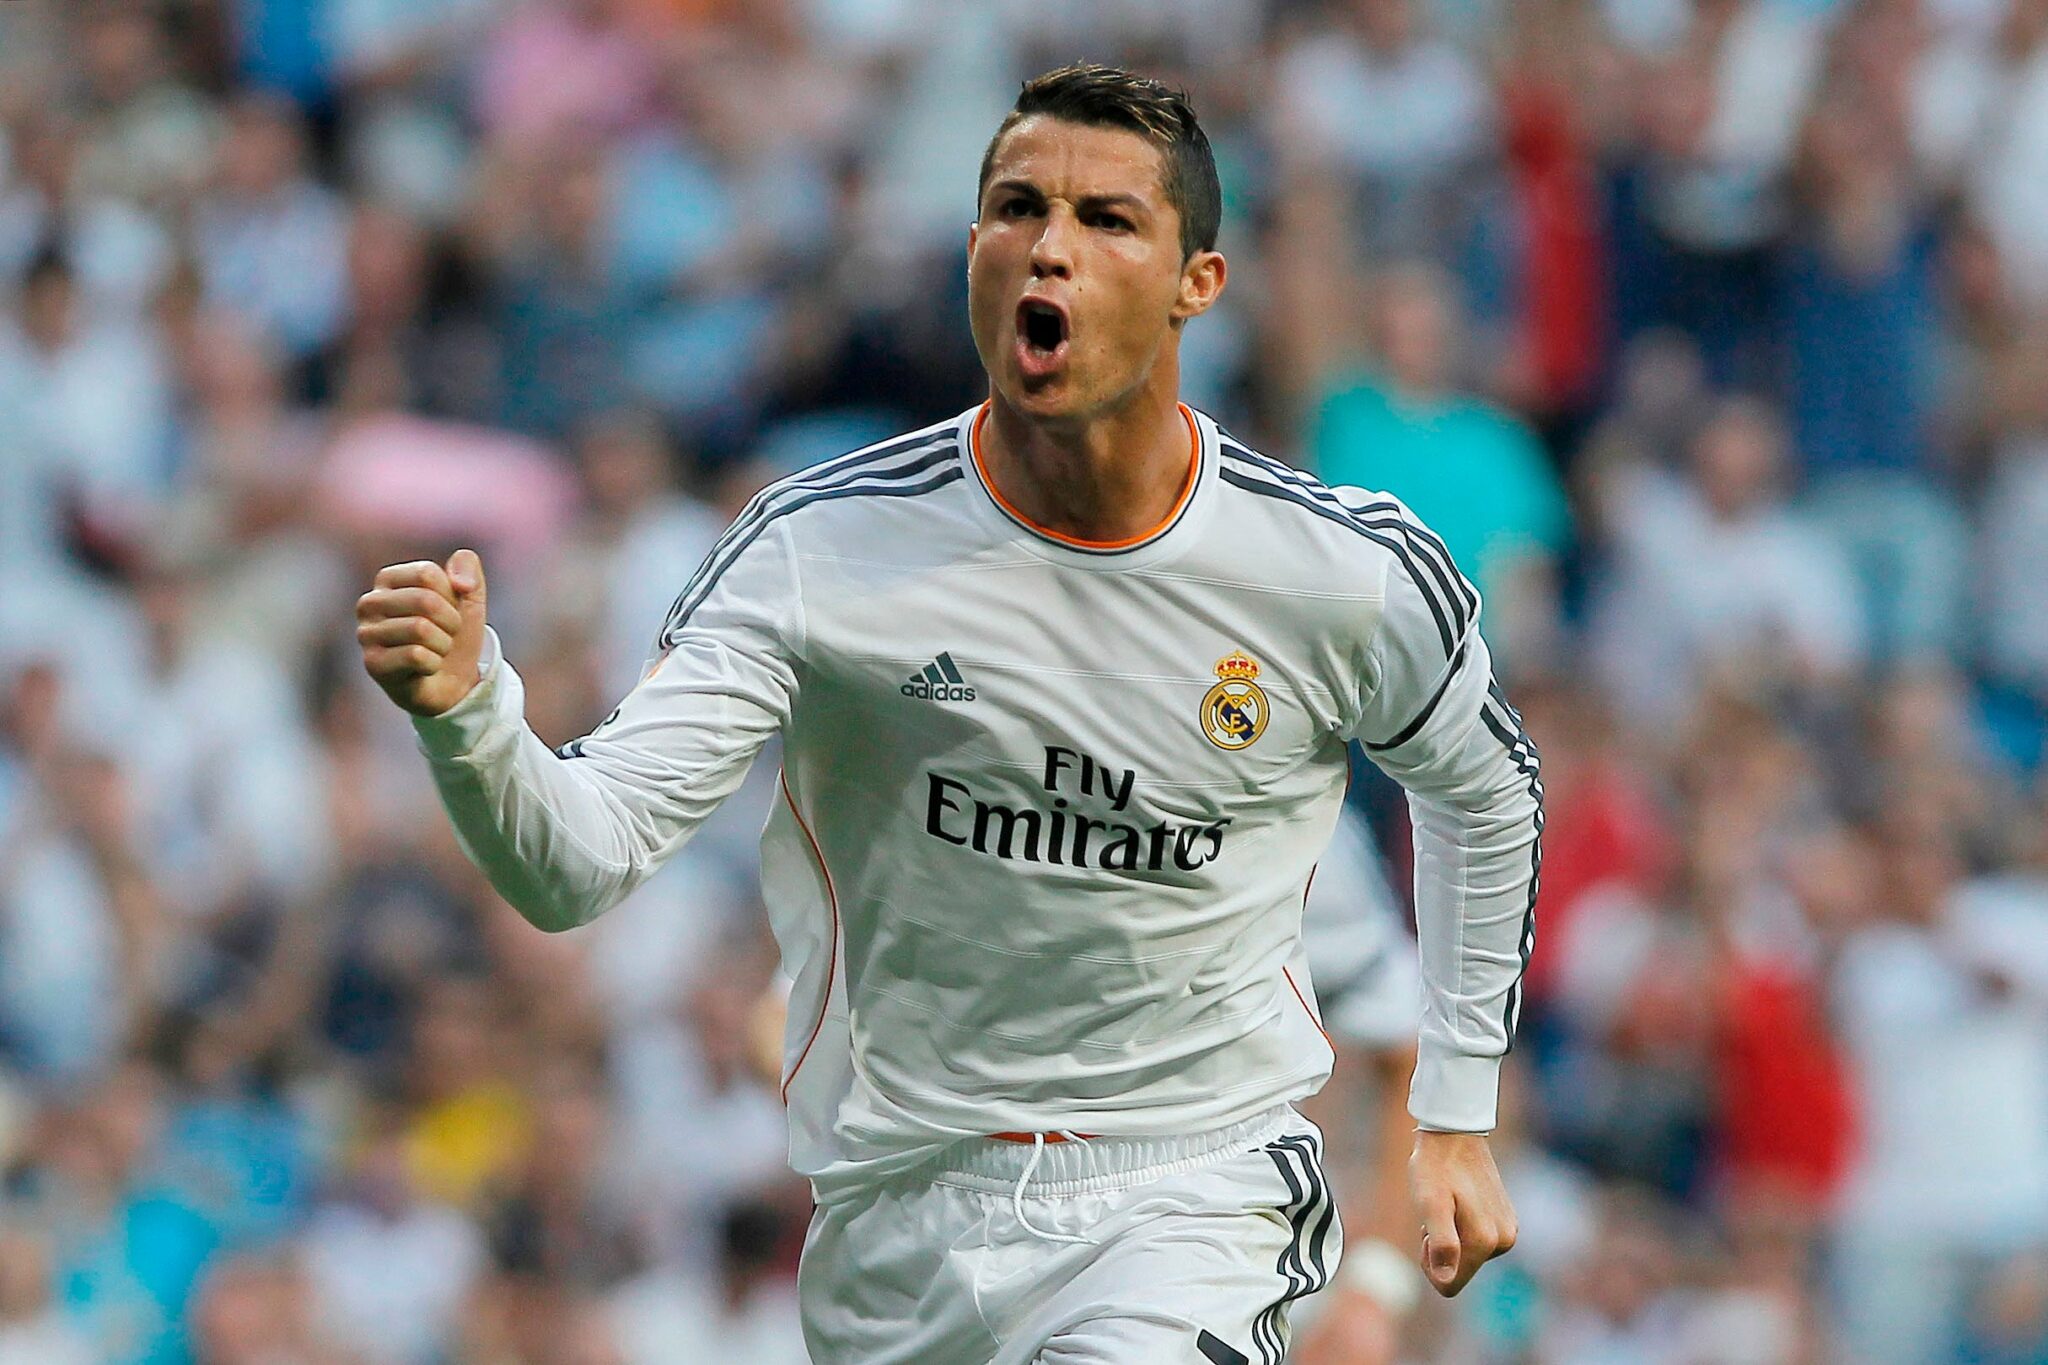 Foot : le Ballon d’or 2016 est attribué à Cristiano Ronaldo